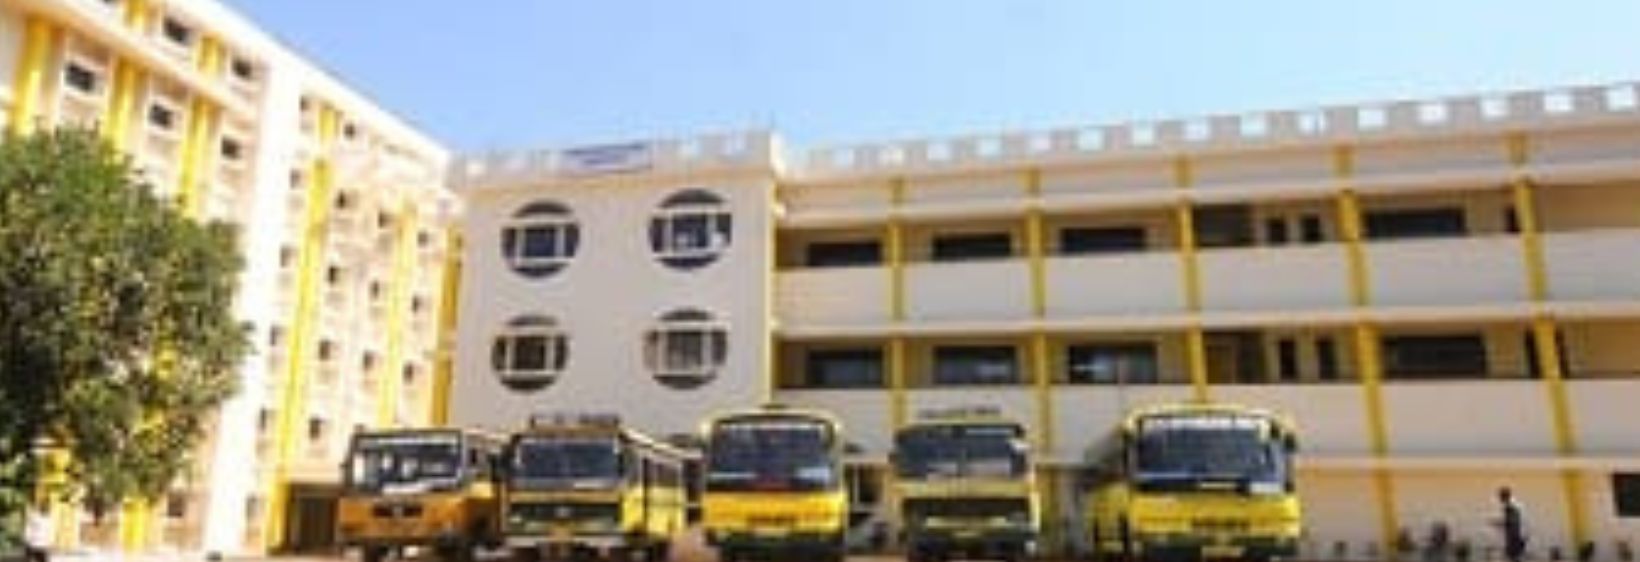 Shree Devi College of Nursing - Mangalore